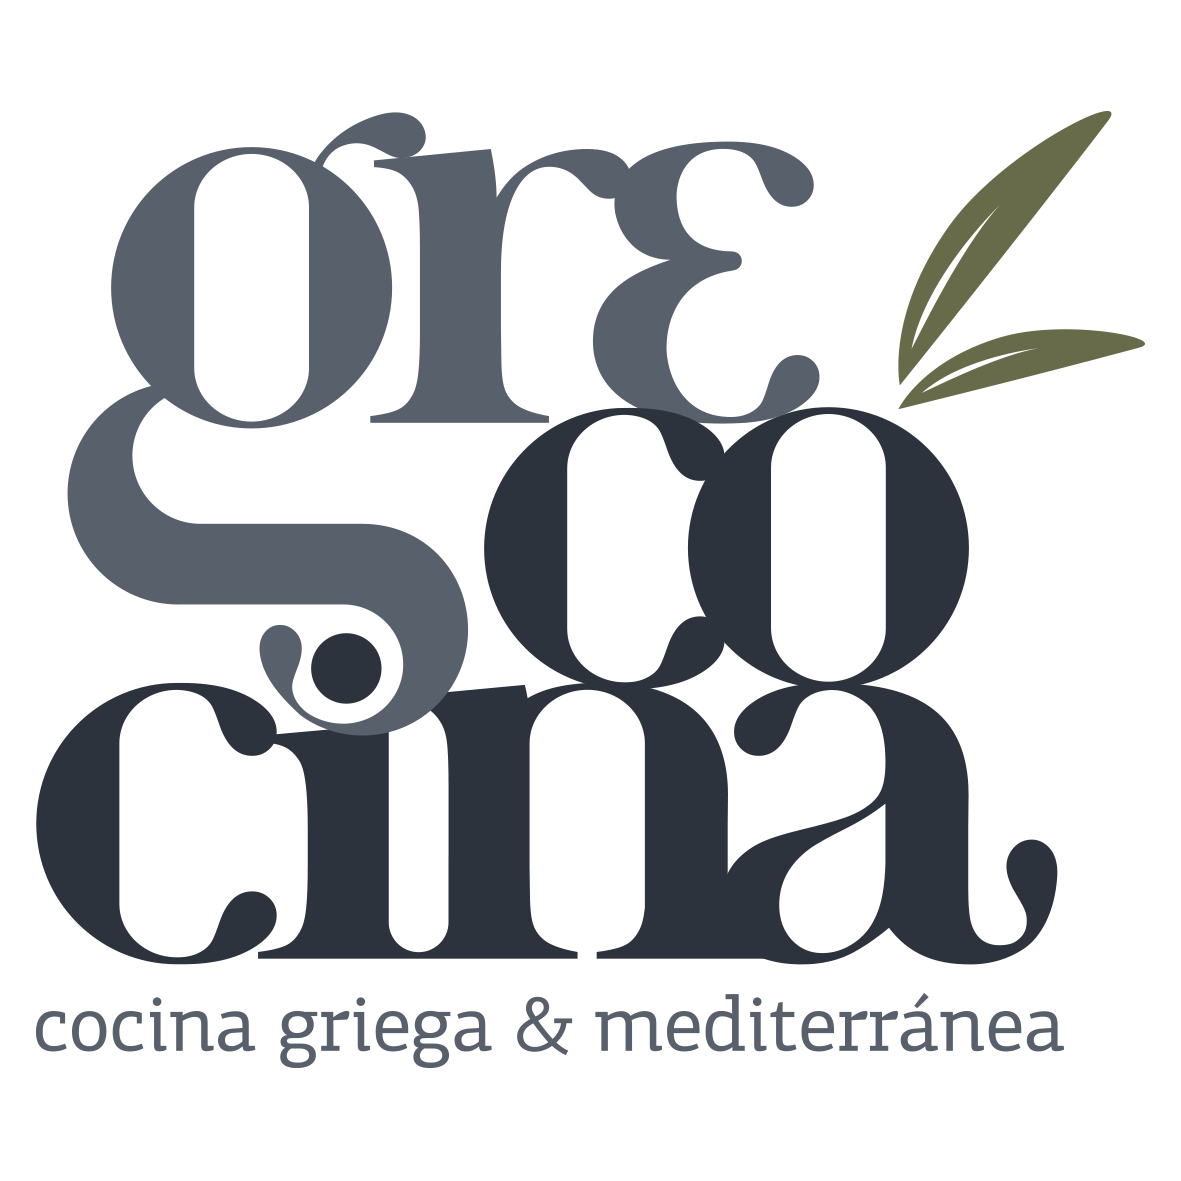 GRECOCINA Restaurant greek and mediterranean cuisine